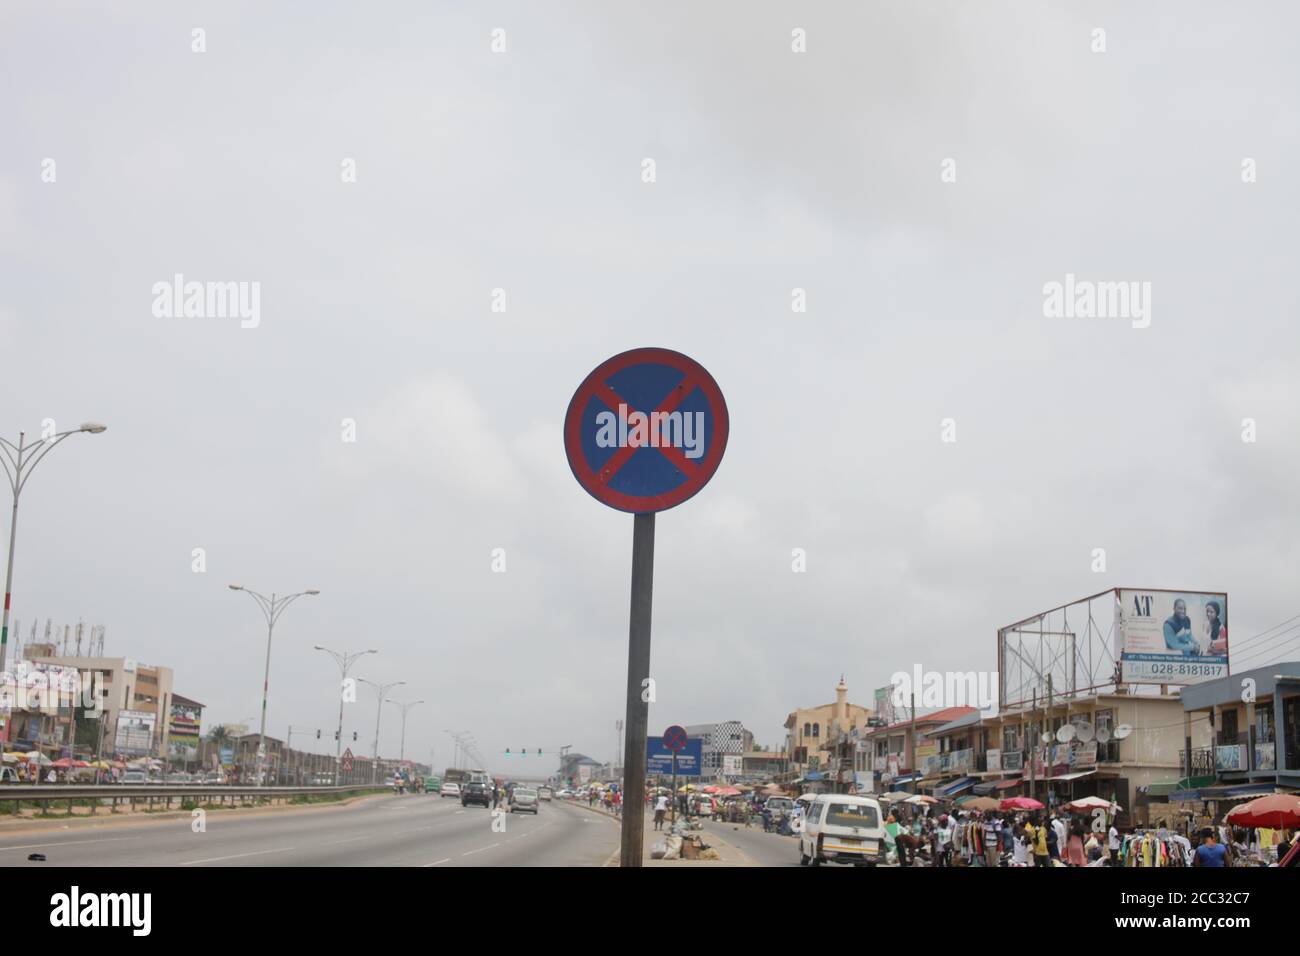 Abidjan, Accra, Business Stock Photo